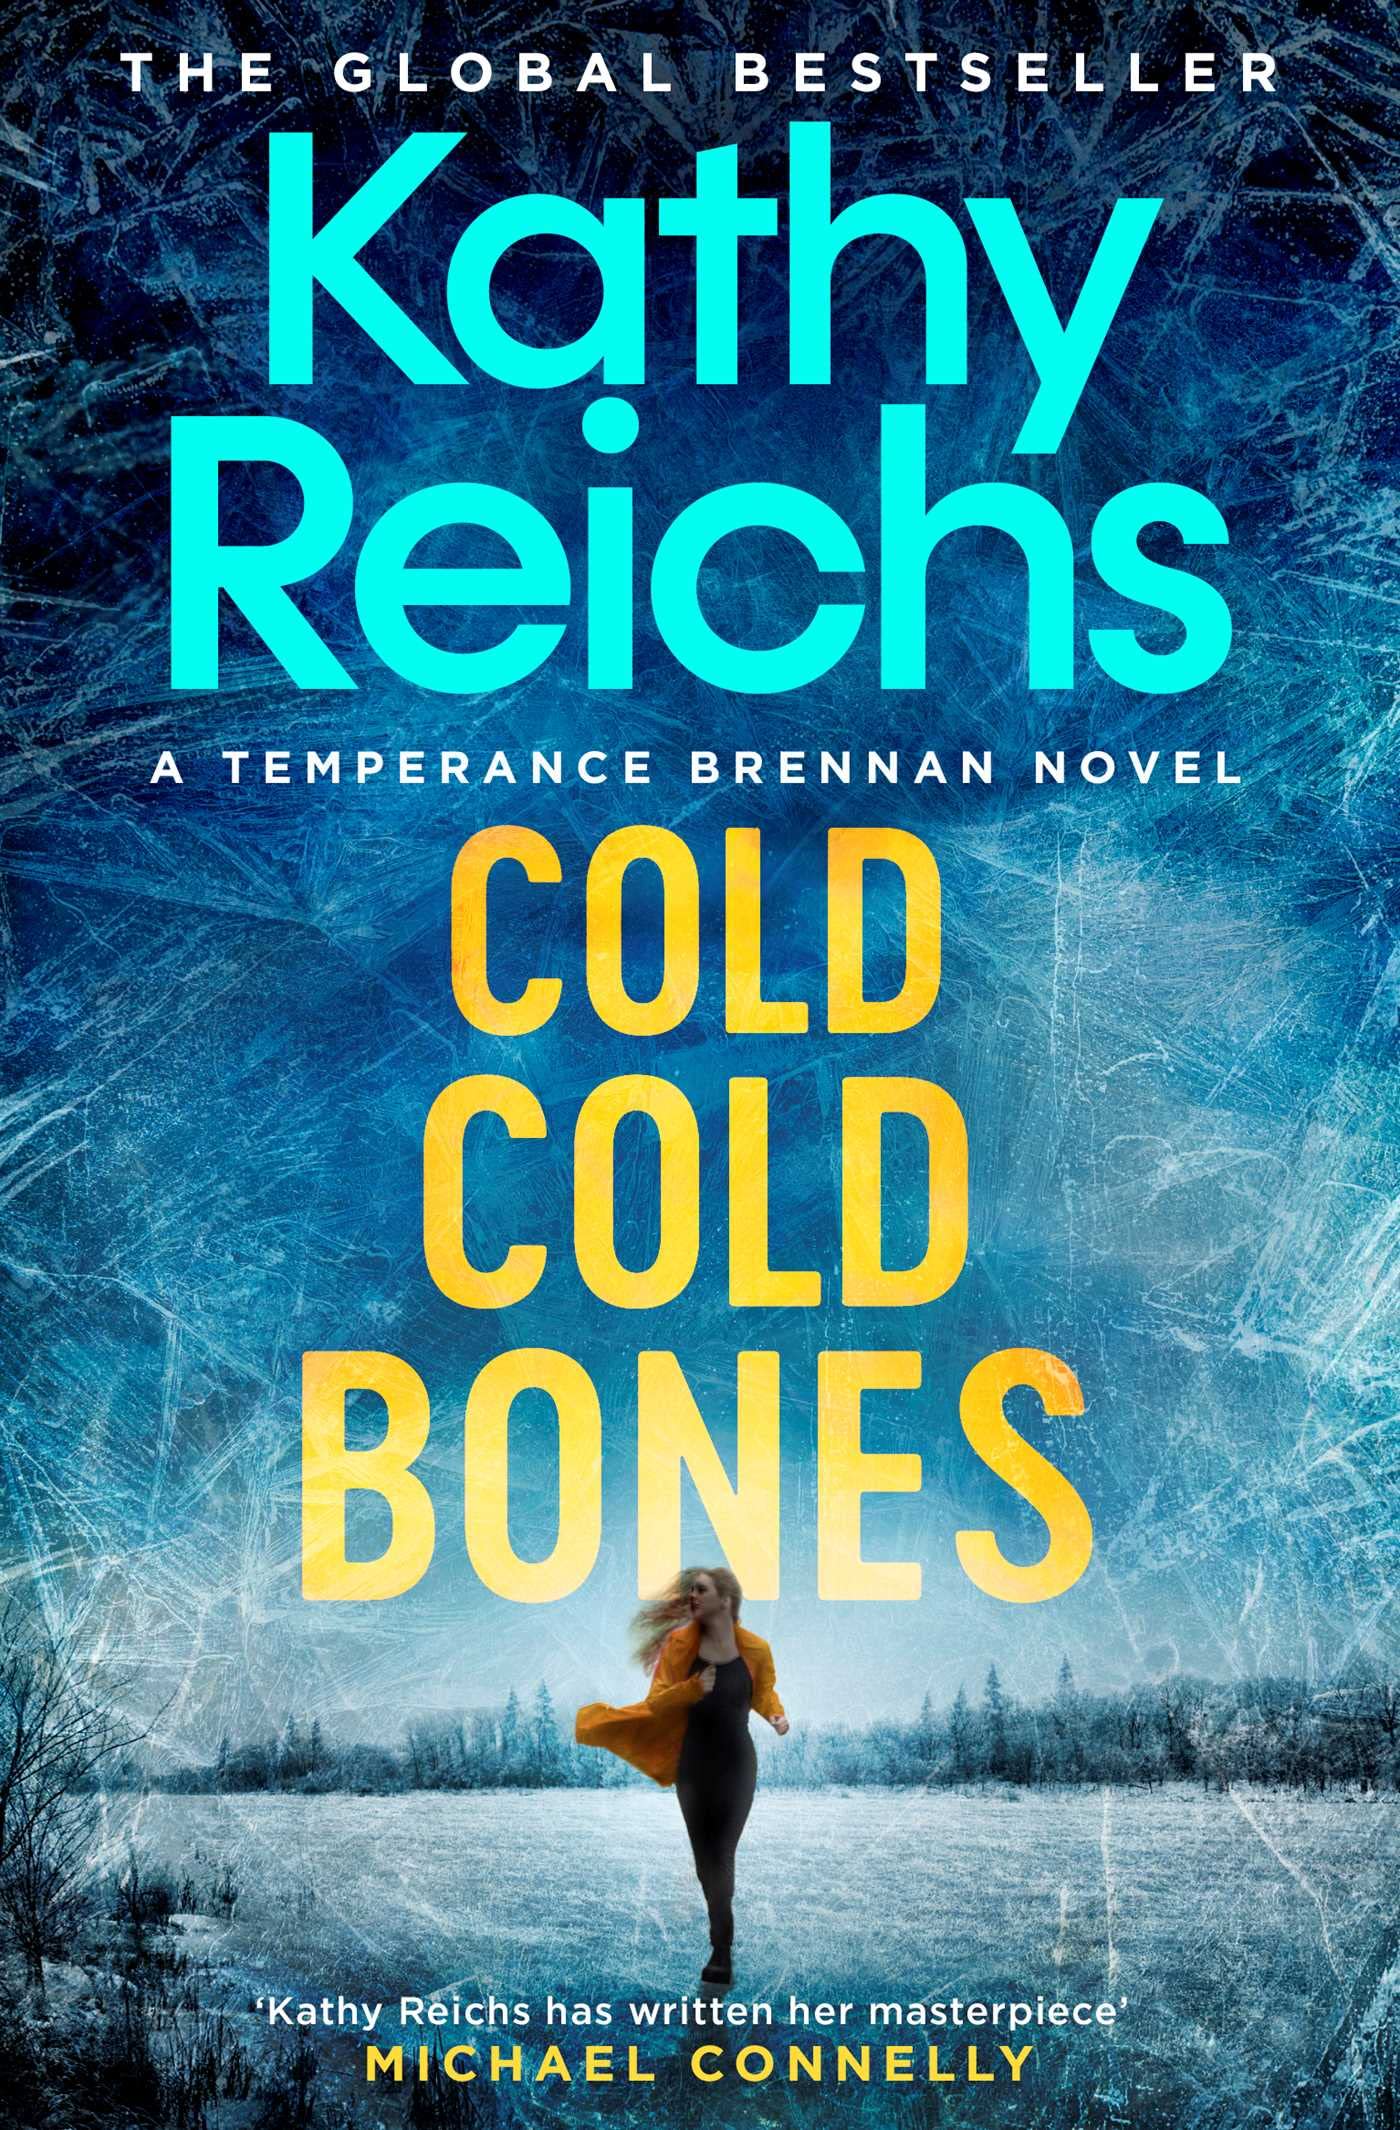 Cold cold bones paperback book cover